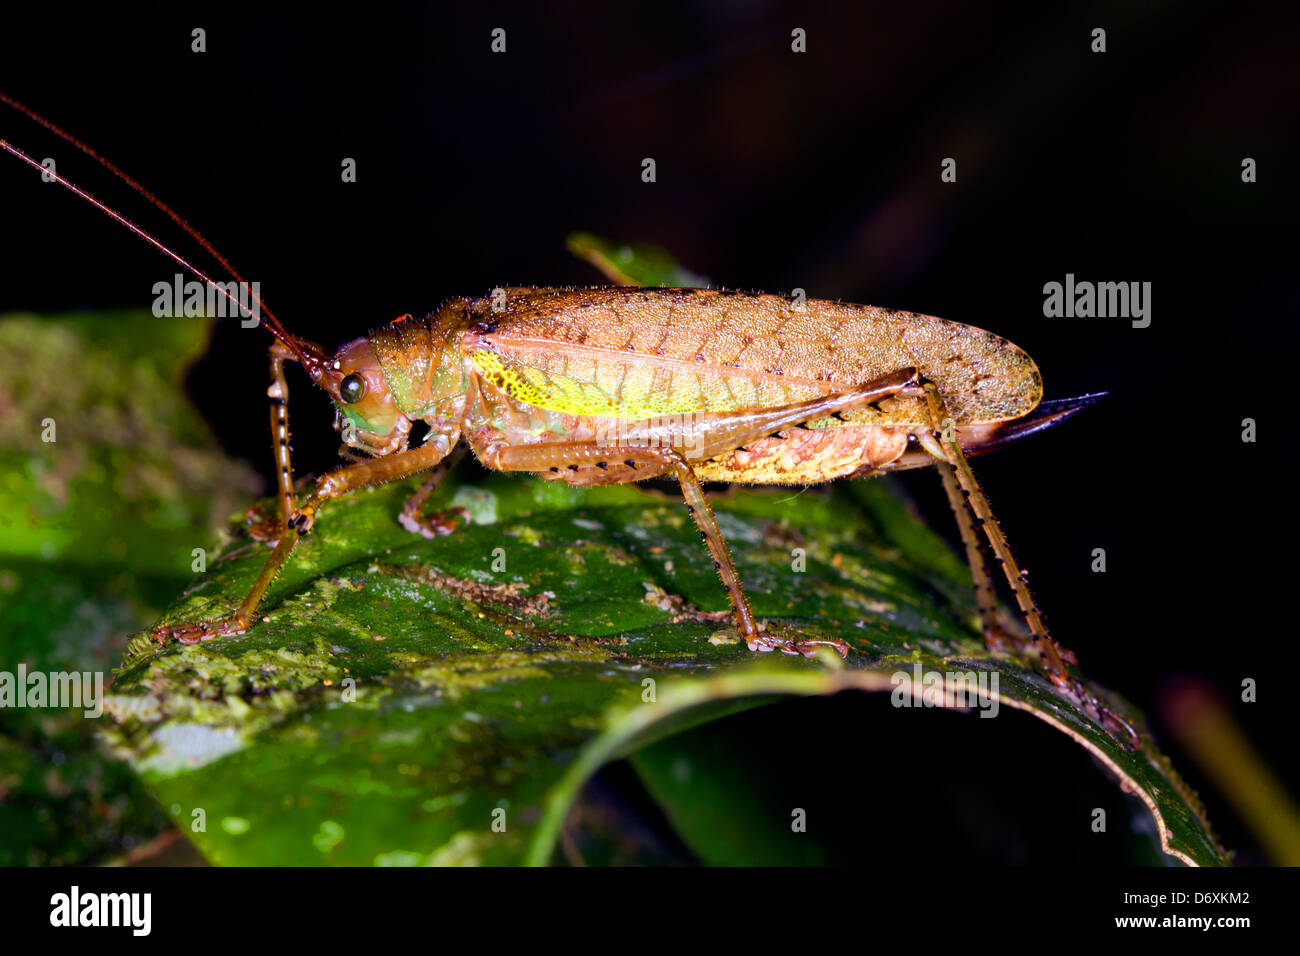 Large bush cricket in the rainforest, Ecuador Stock Photo